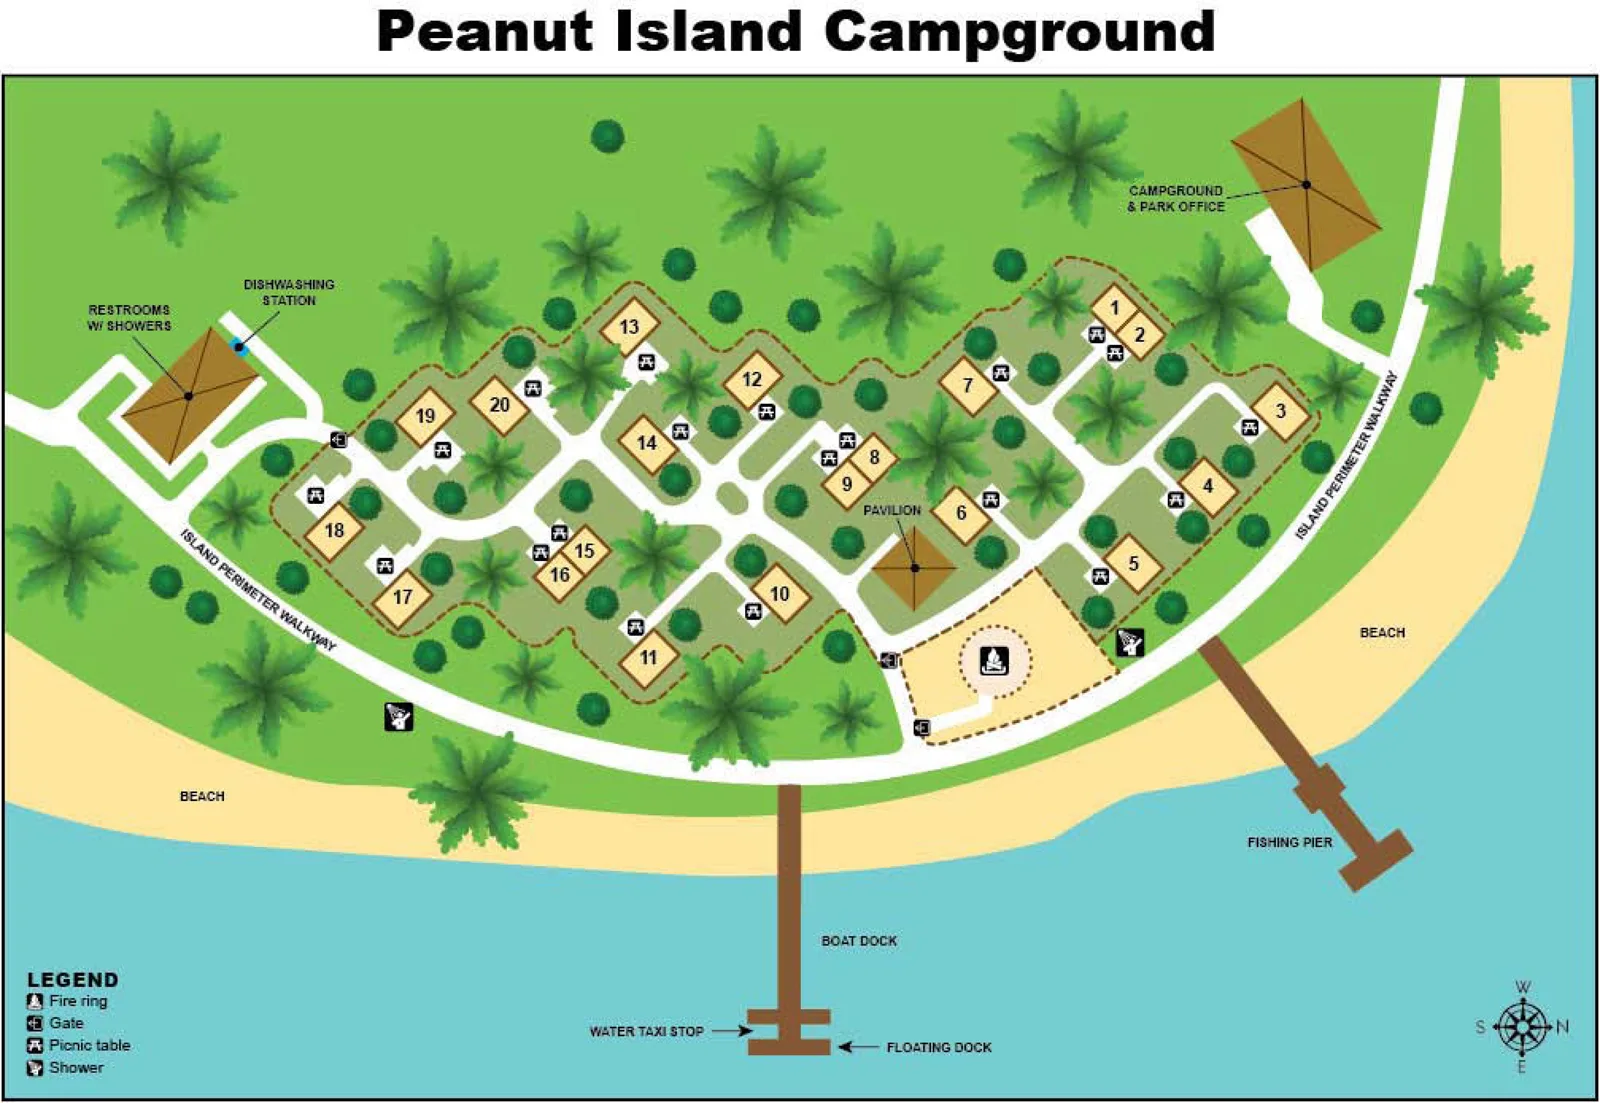 Map of Peanut Island campground